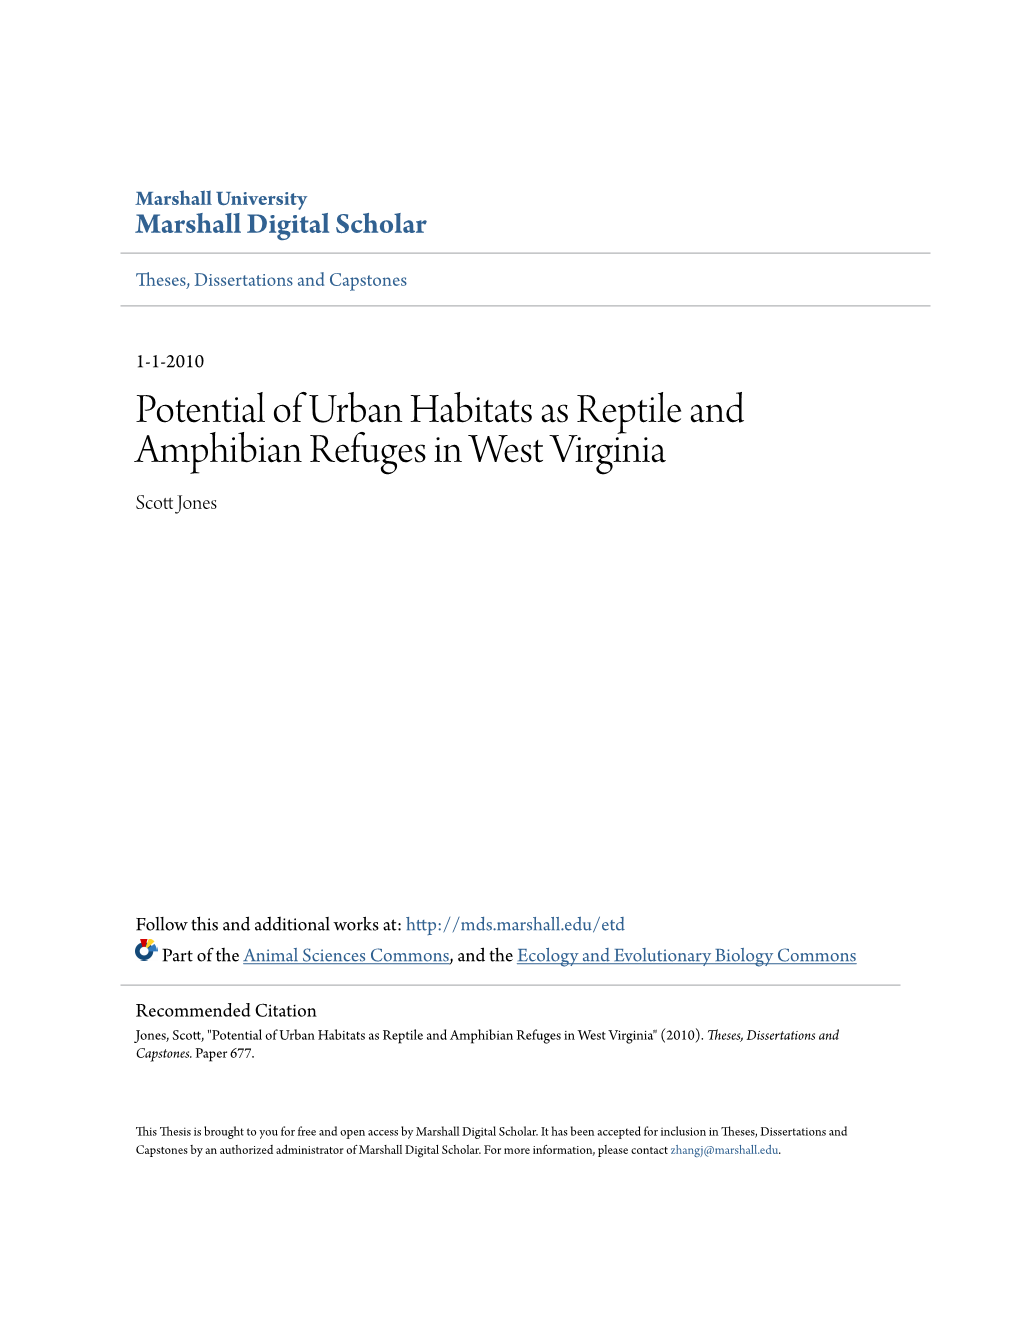 Potential of Urban Habitats As Reptile and Amphibian Refuges in West Virginia Scott Onesj